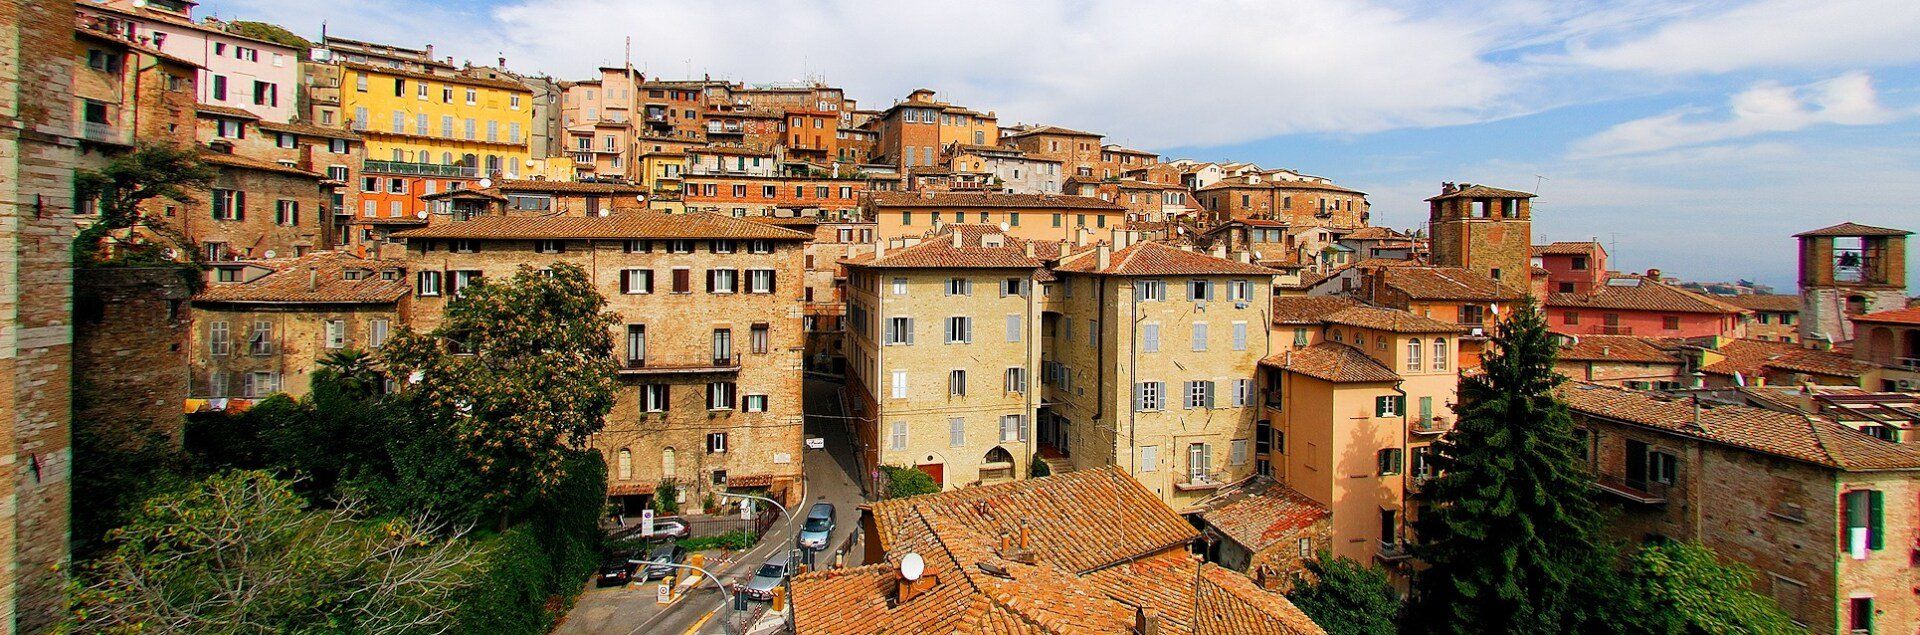 Altstadt von Perugia, Umbrien